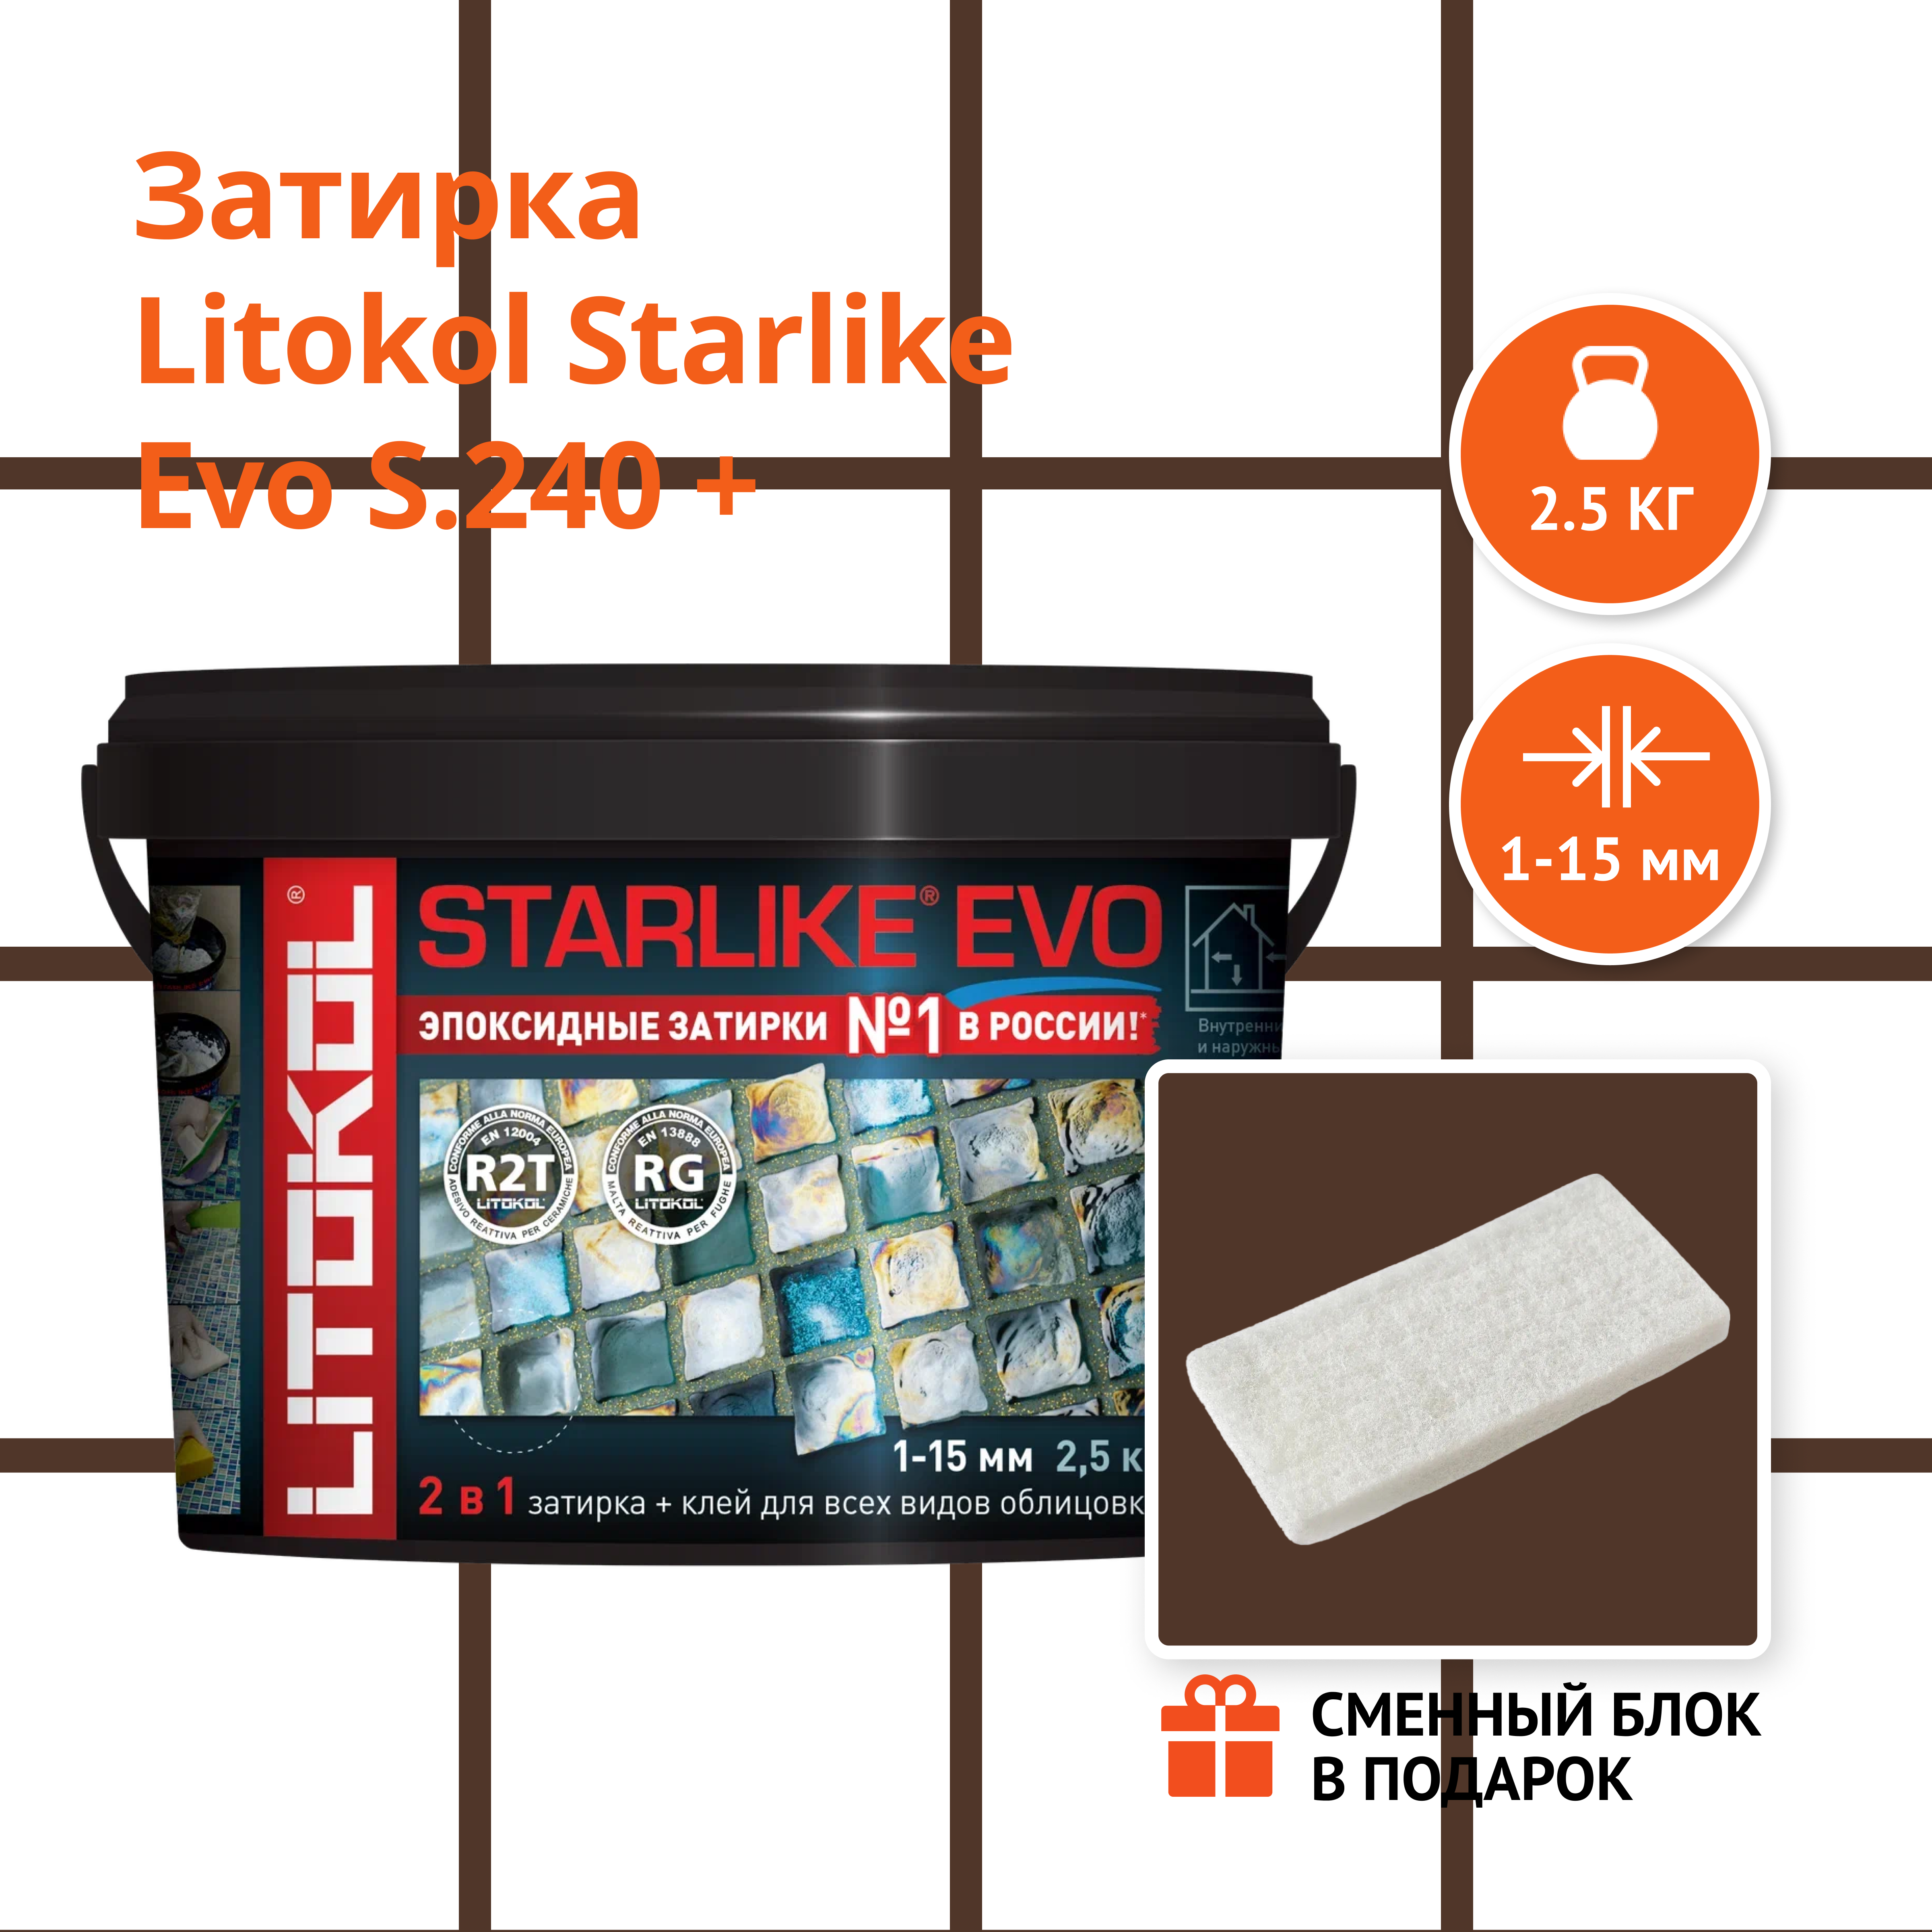 Затирка LITOKOL STARLIKE EVO S.240 MOKA 2.5 кг + Сменный блок в подарок